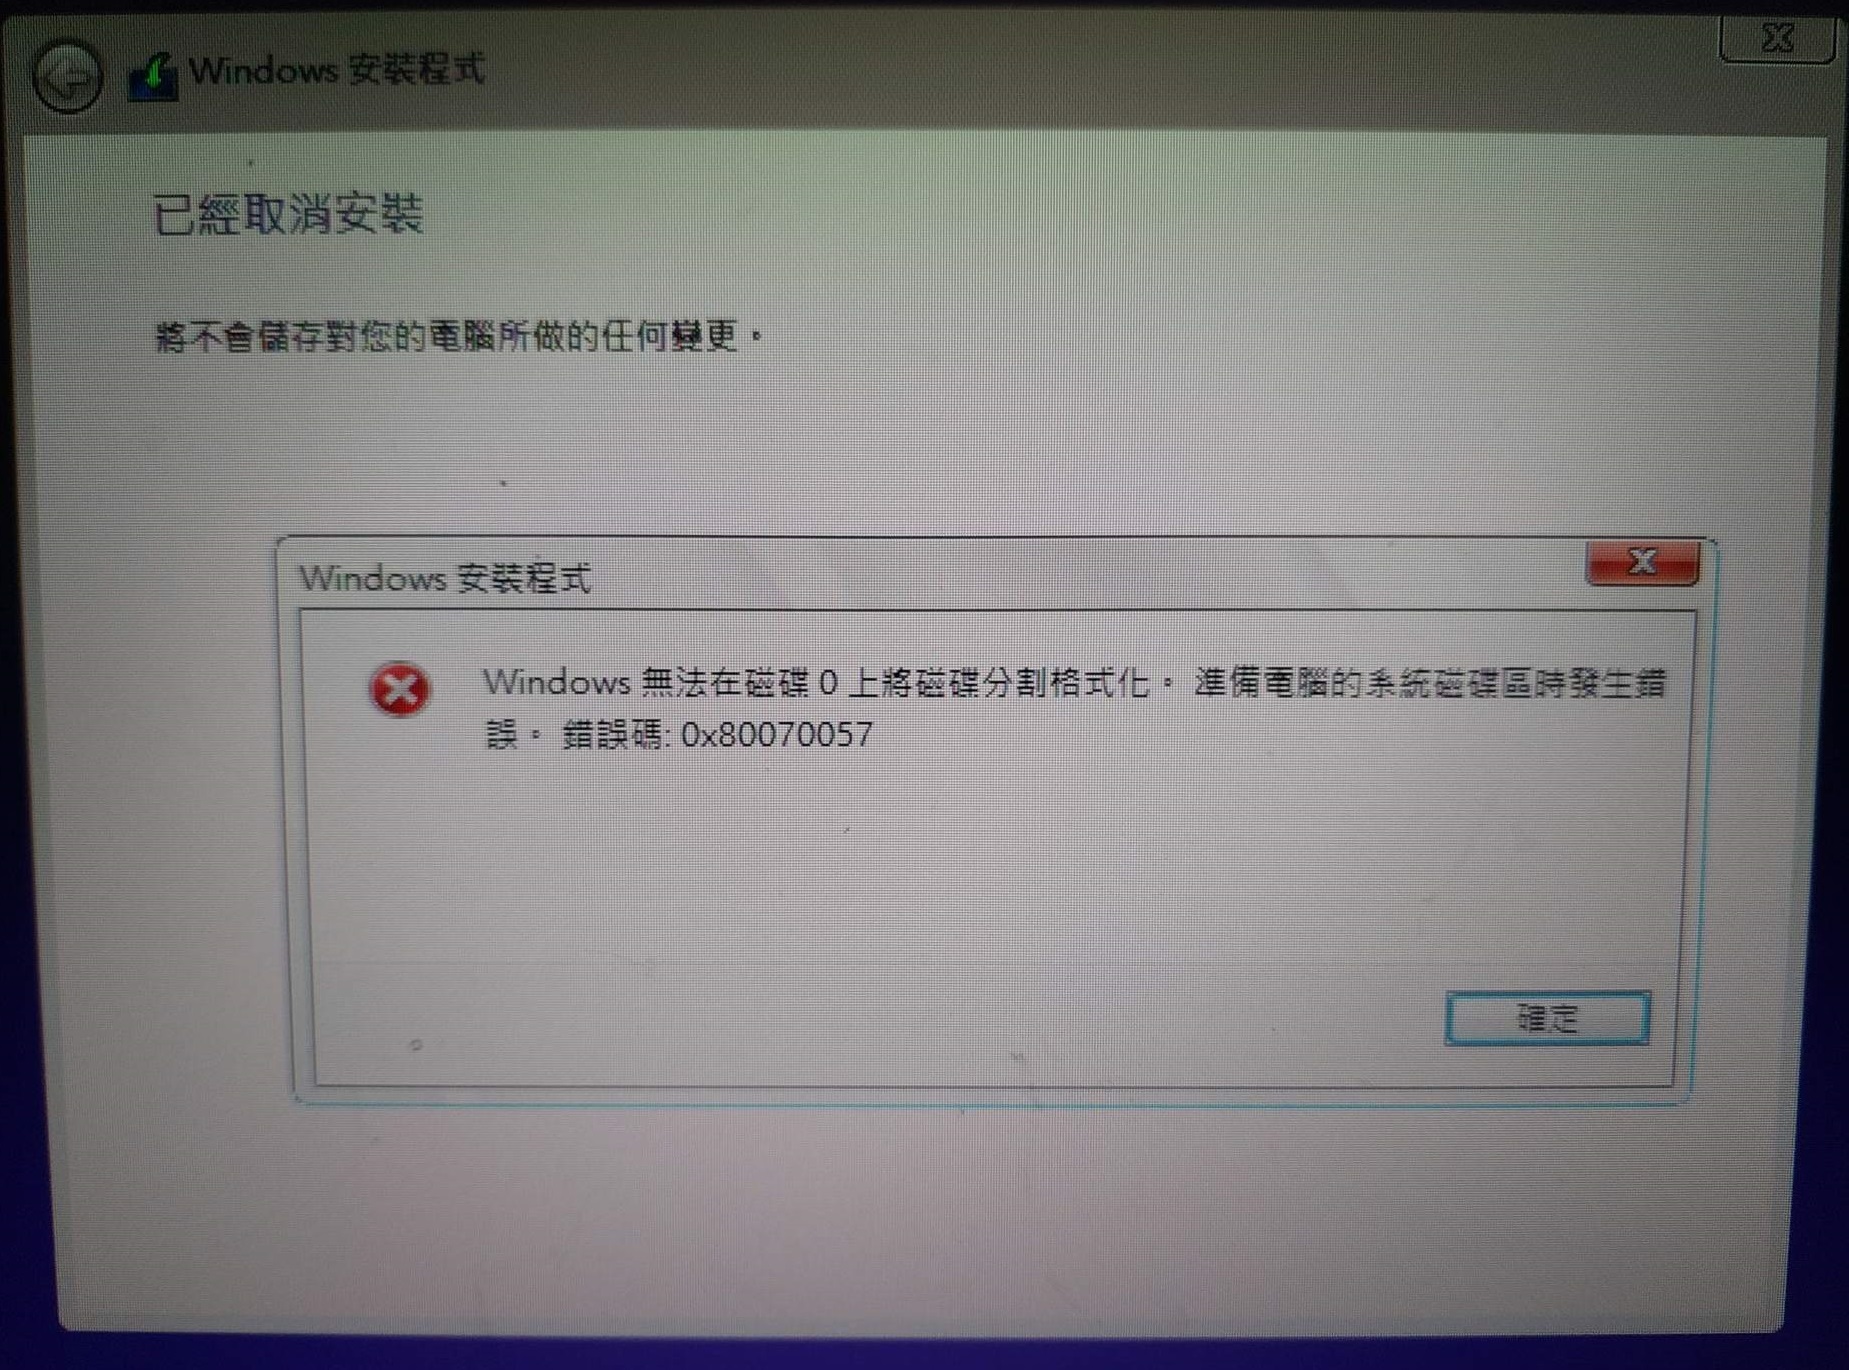 windows無法在磁碟0上醬磁碟分割格式化，準備電腦的系統磁碟區時發生錯誤，錯誤碼：0x80070057